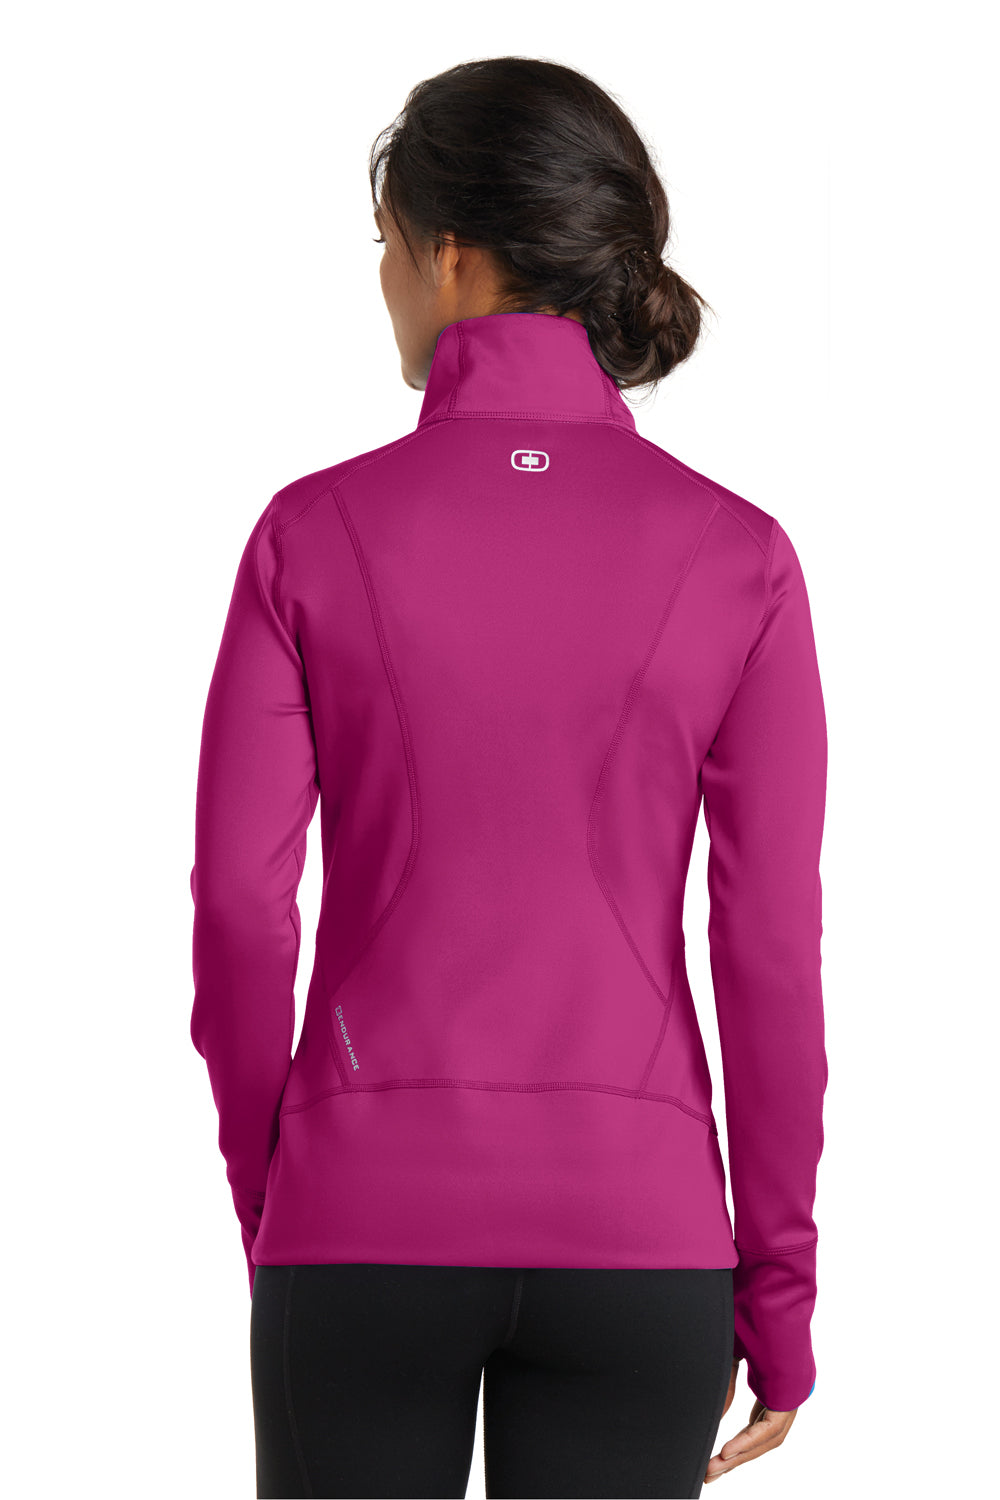 Ogio LOE700 Womens Endurance Fulcrum Full Zip Jacket Fuchsia Pink Back